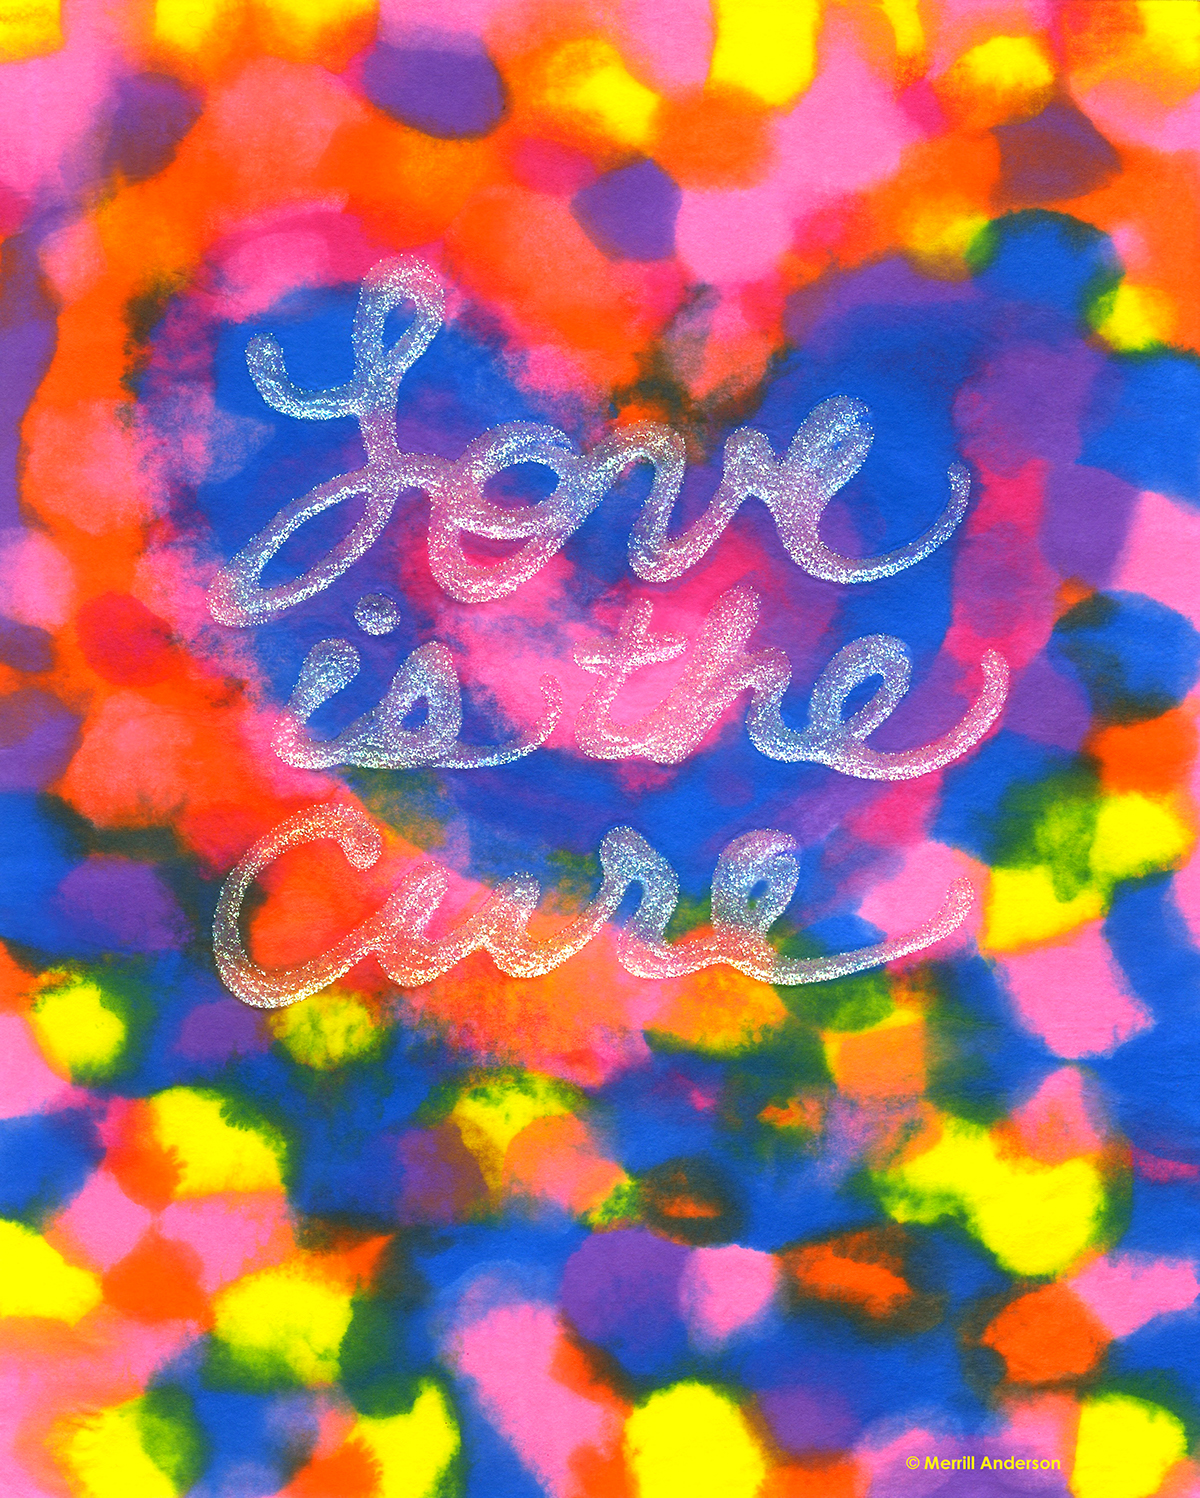 Adobe Portfolio hearts Love childlike inspiration cards screensavers Paintings valentines